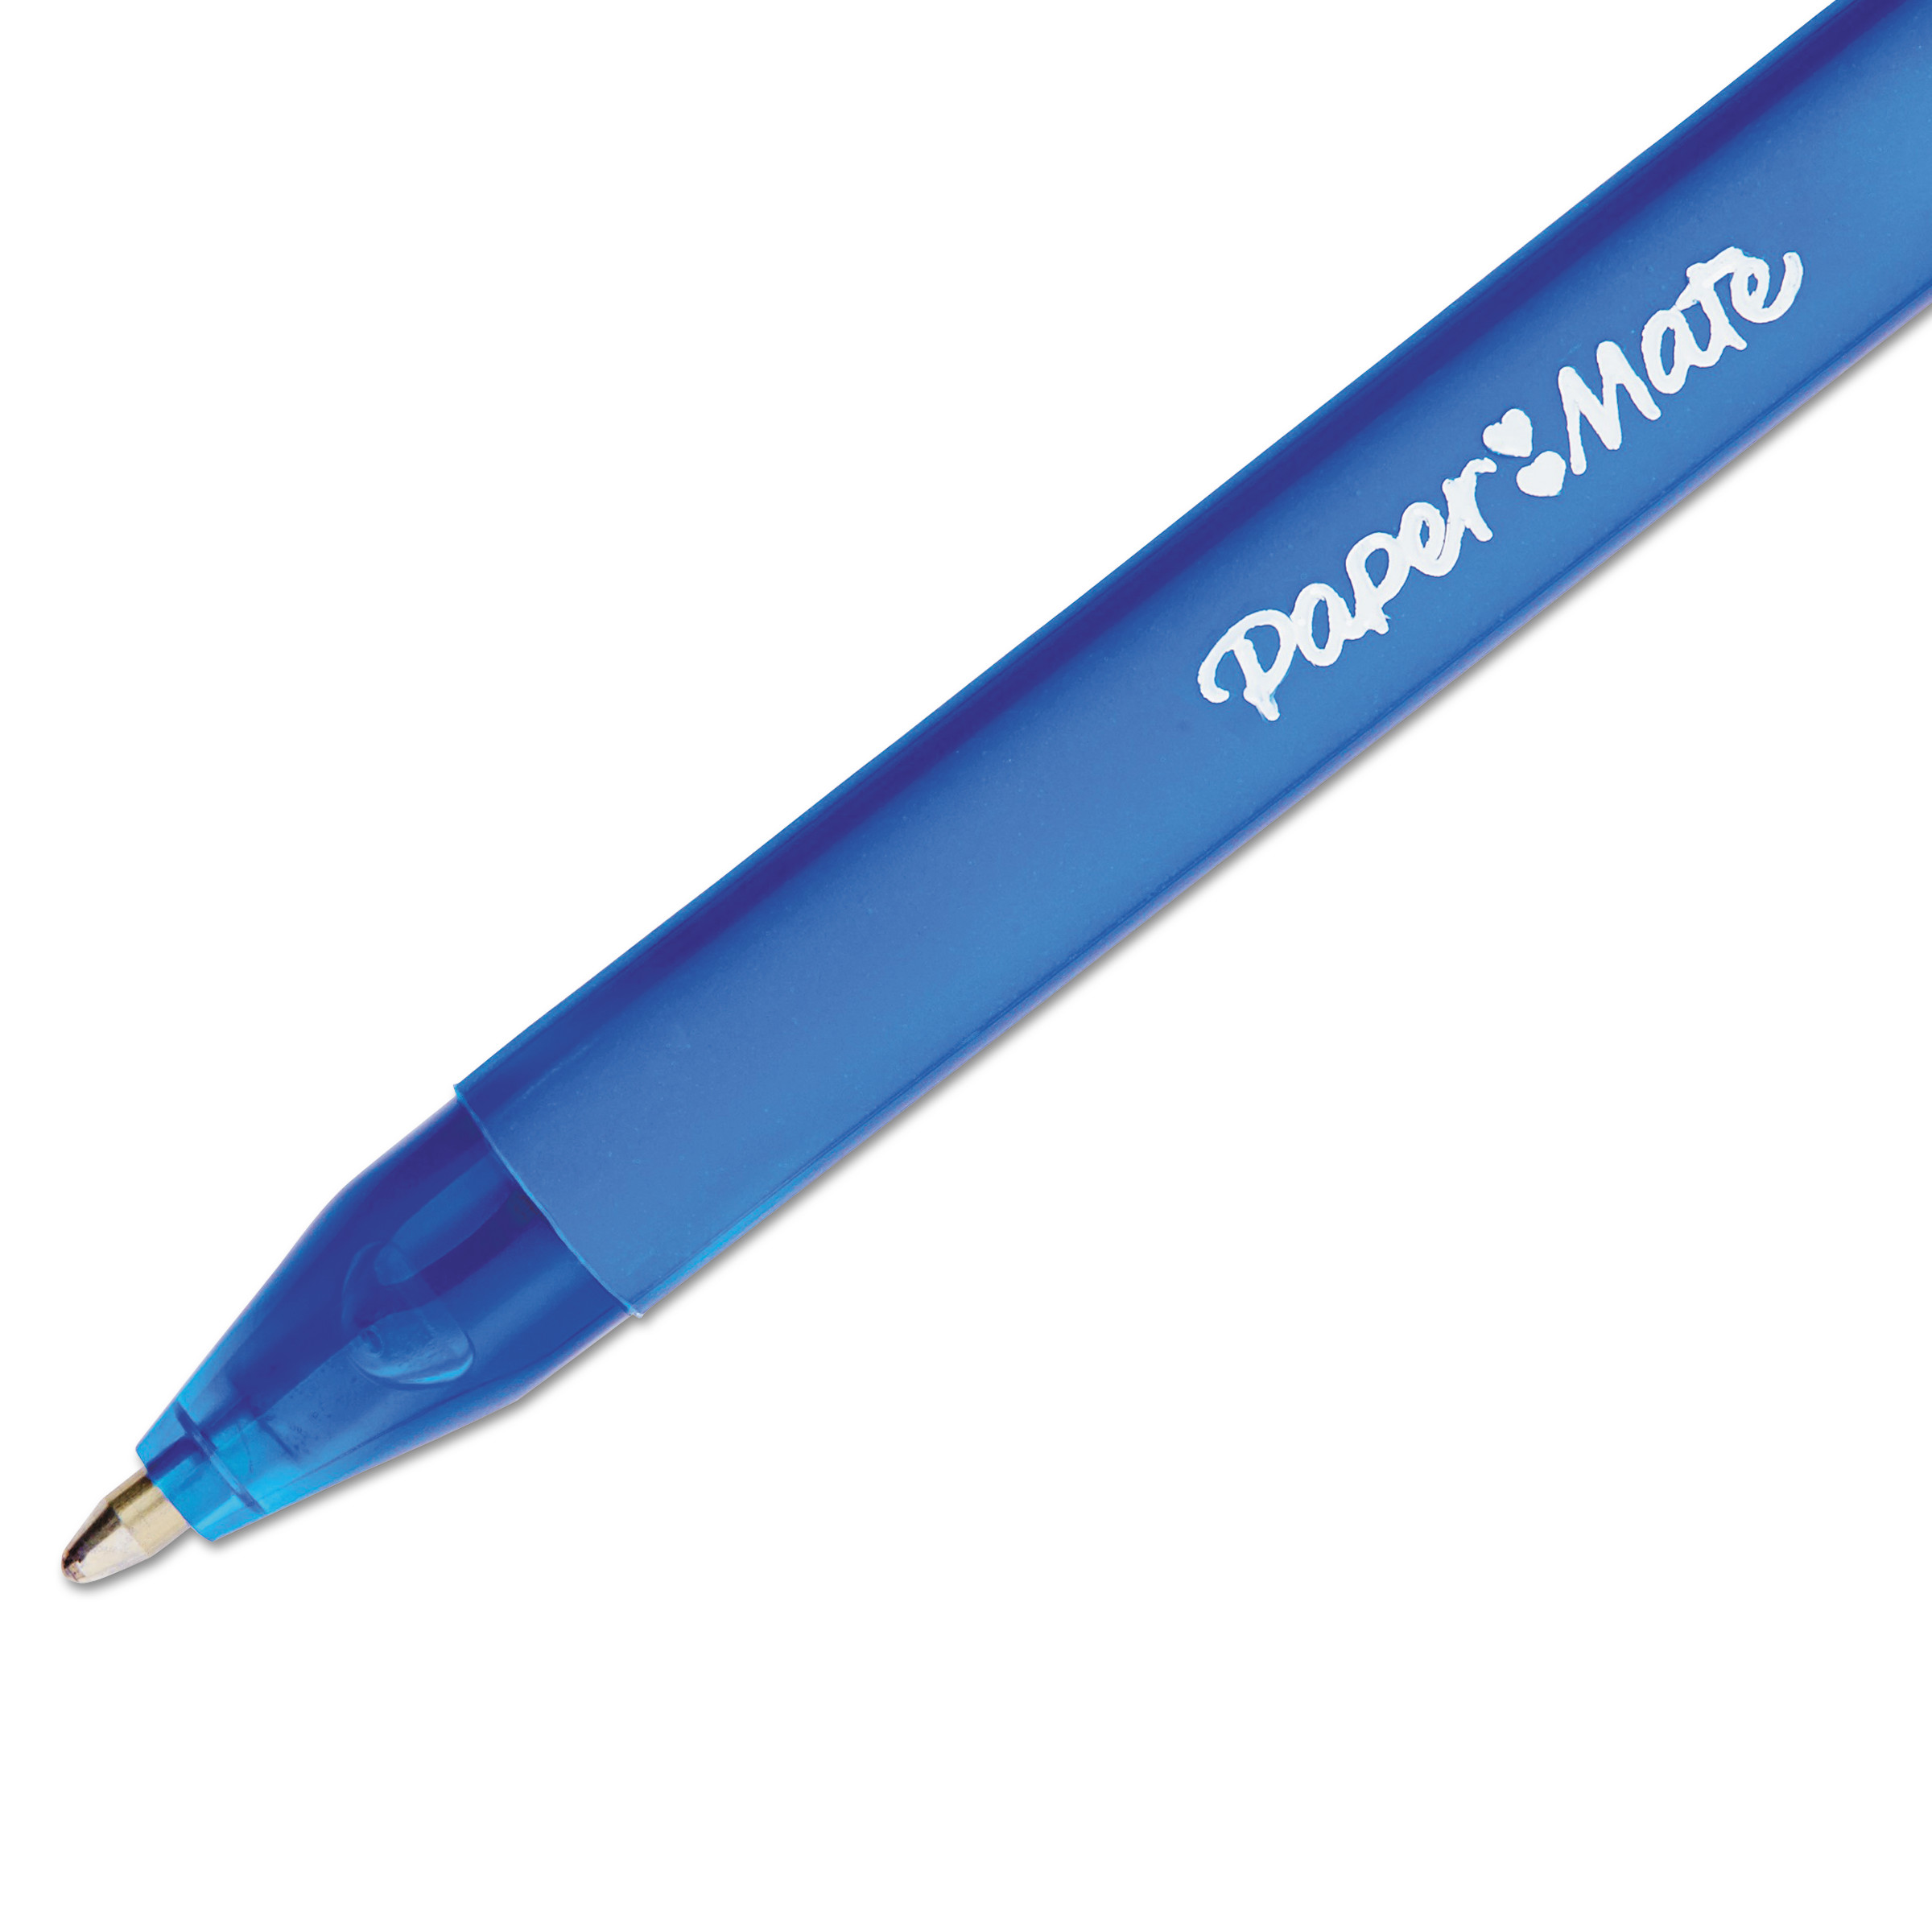 Comfort Mate Retractable Pens, Blue, medium point, 12 ct - image 3 of 3